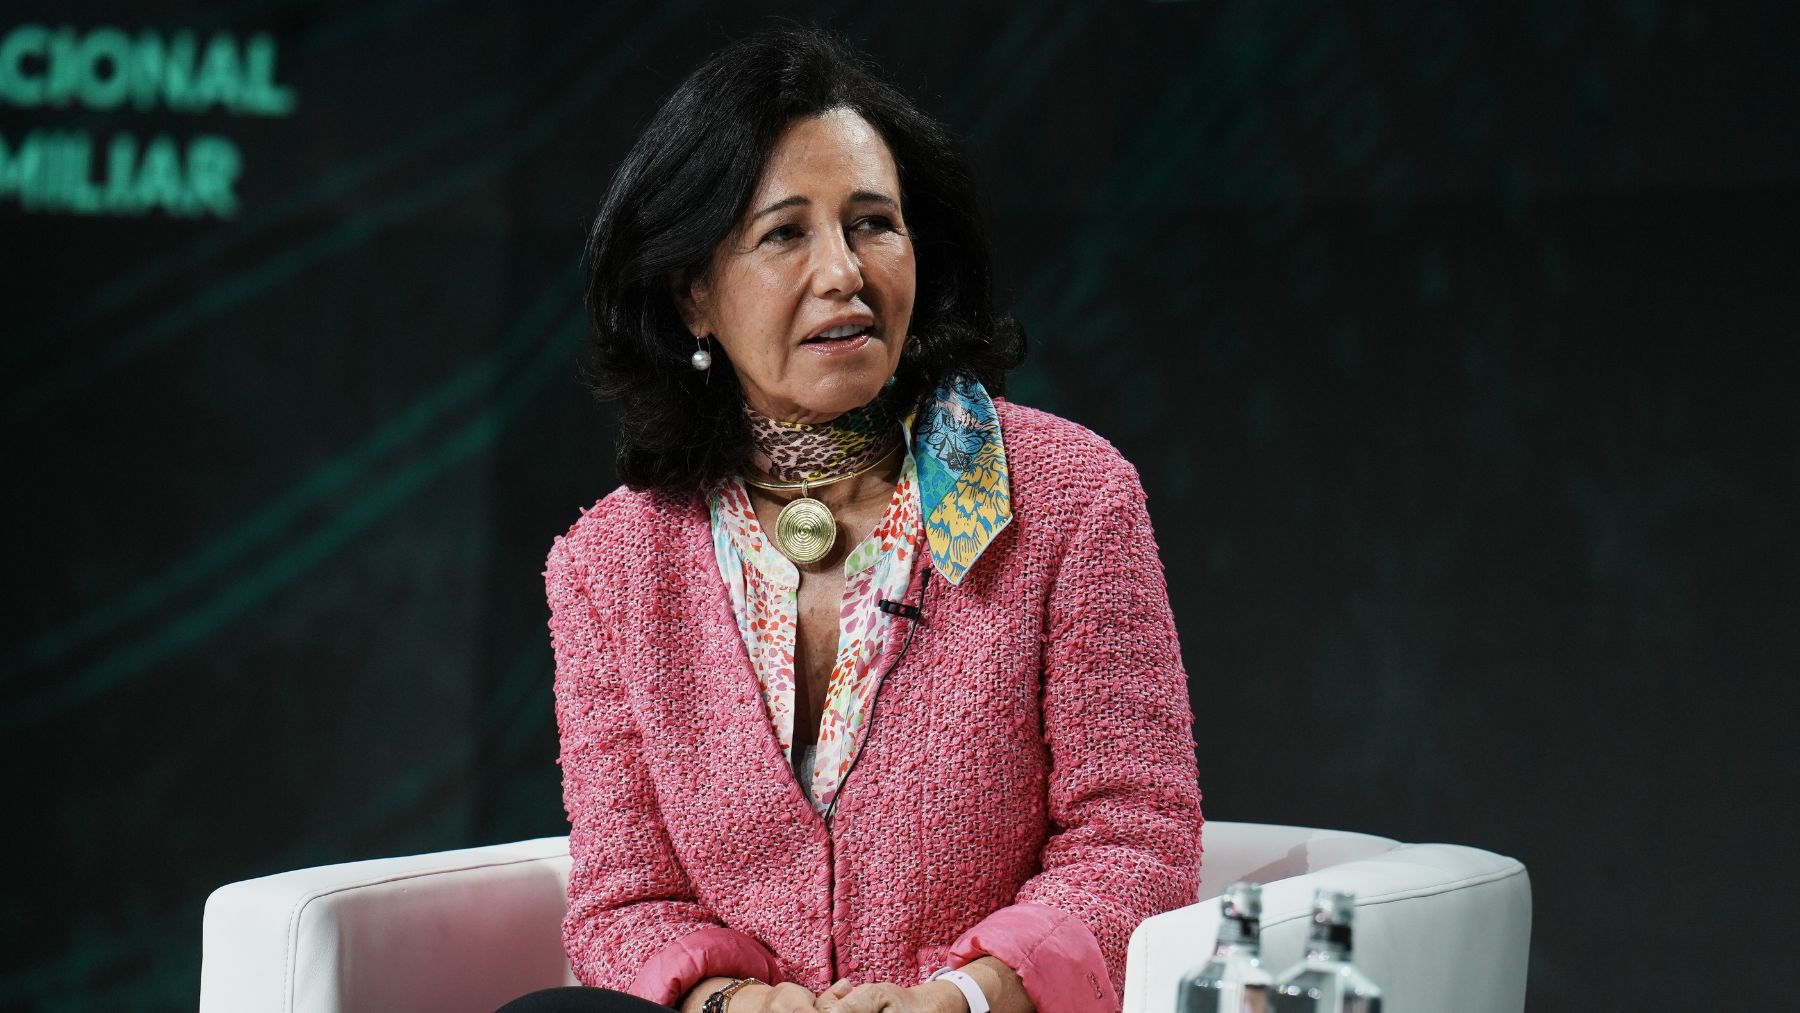 La presidenta de Banco Santander, Ana Patricia Botín (Foto: EuropaPress)